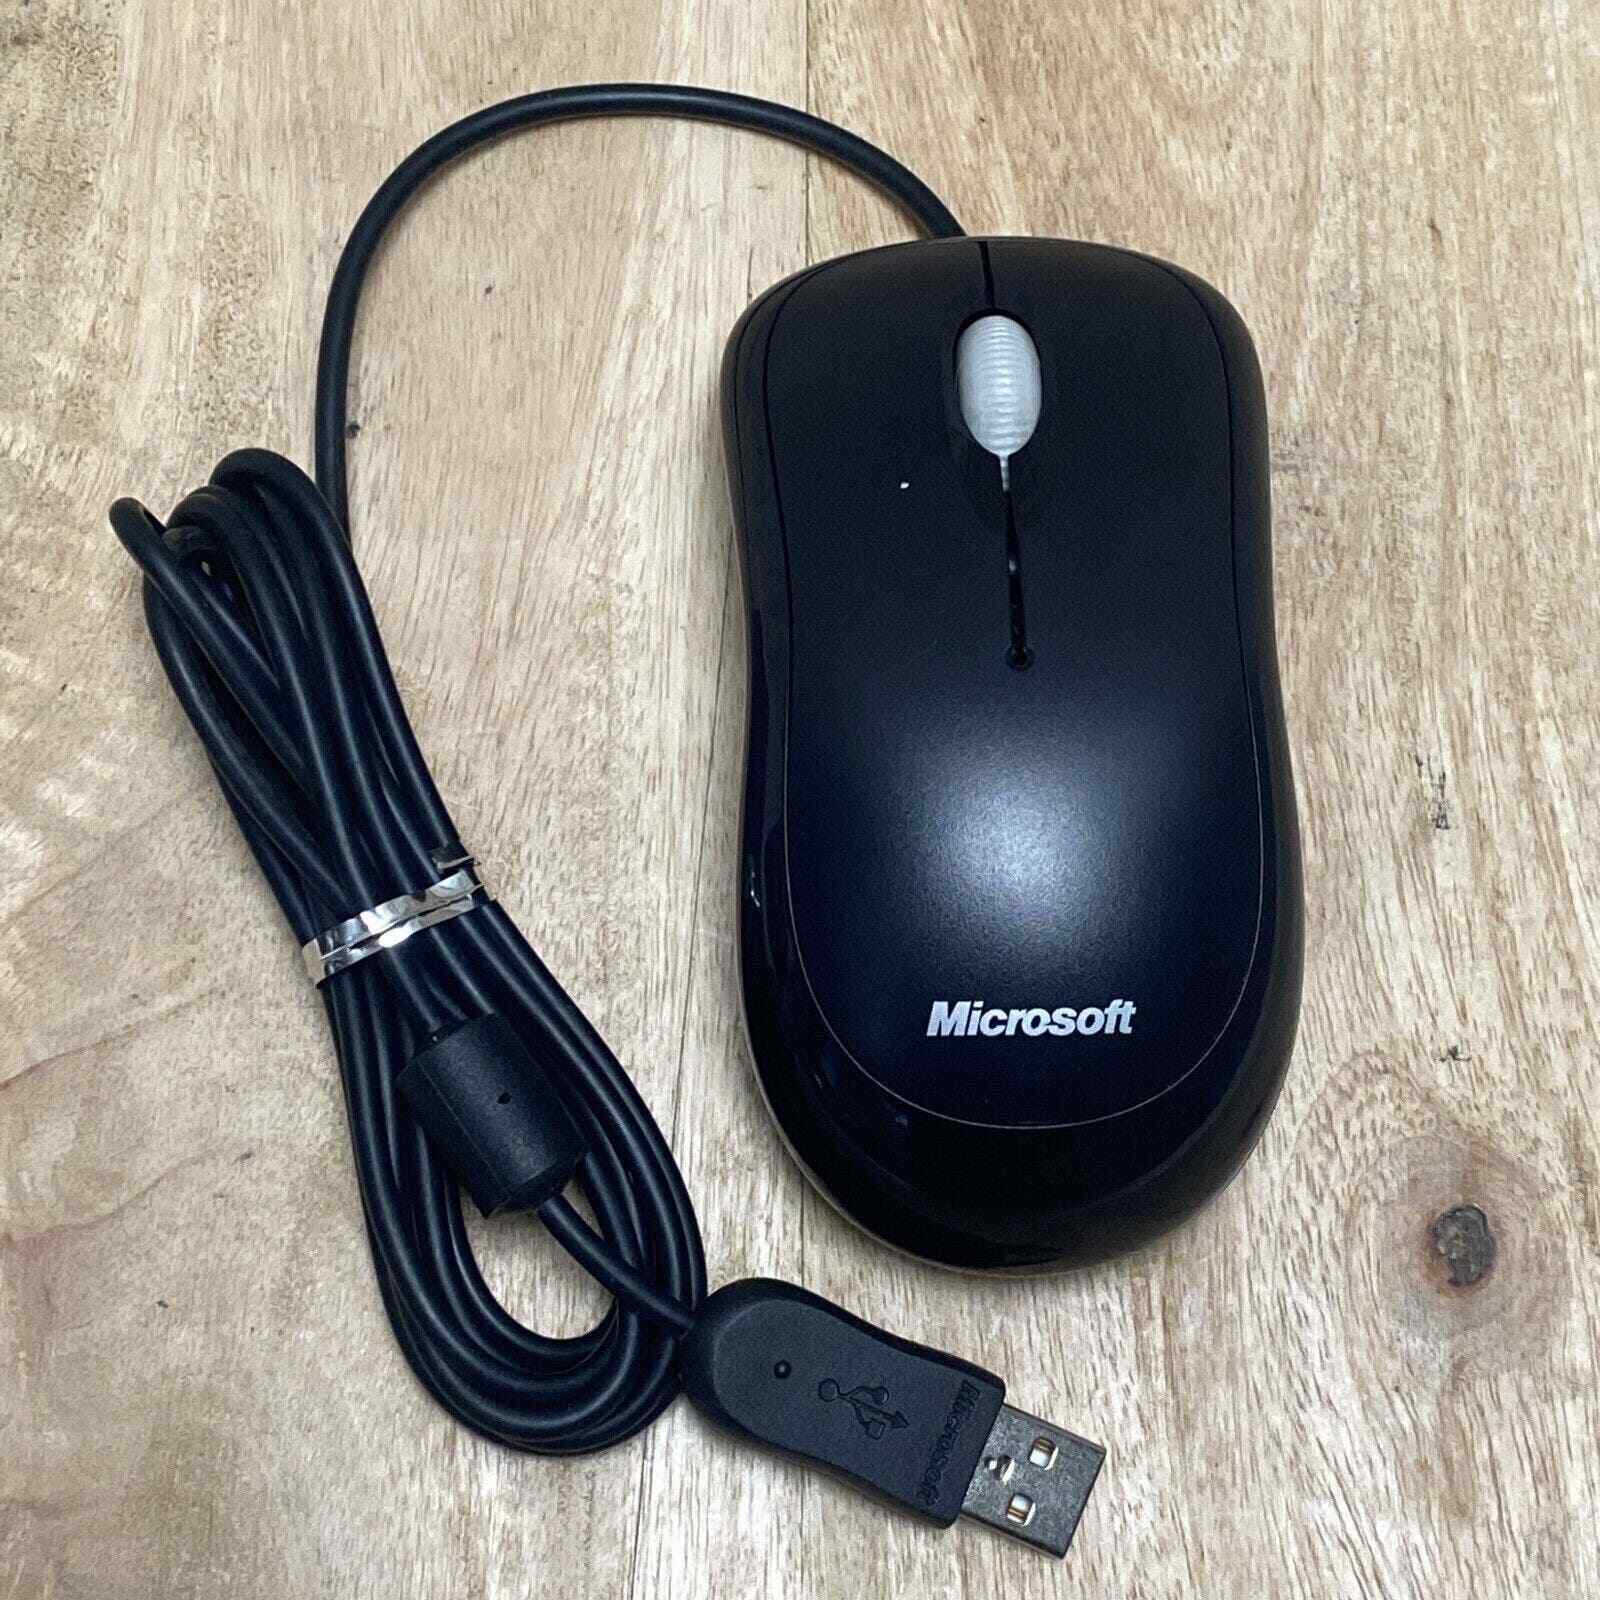 Microsoft Basic Optical Mouse v2.0 Scroll PS2 Compatible Model 1113 Black TESTED